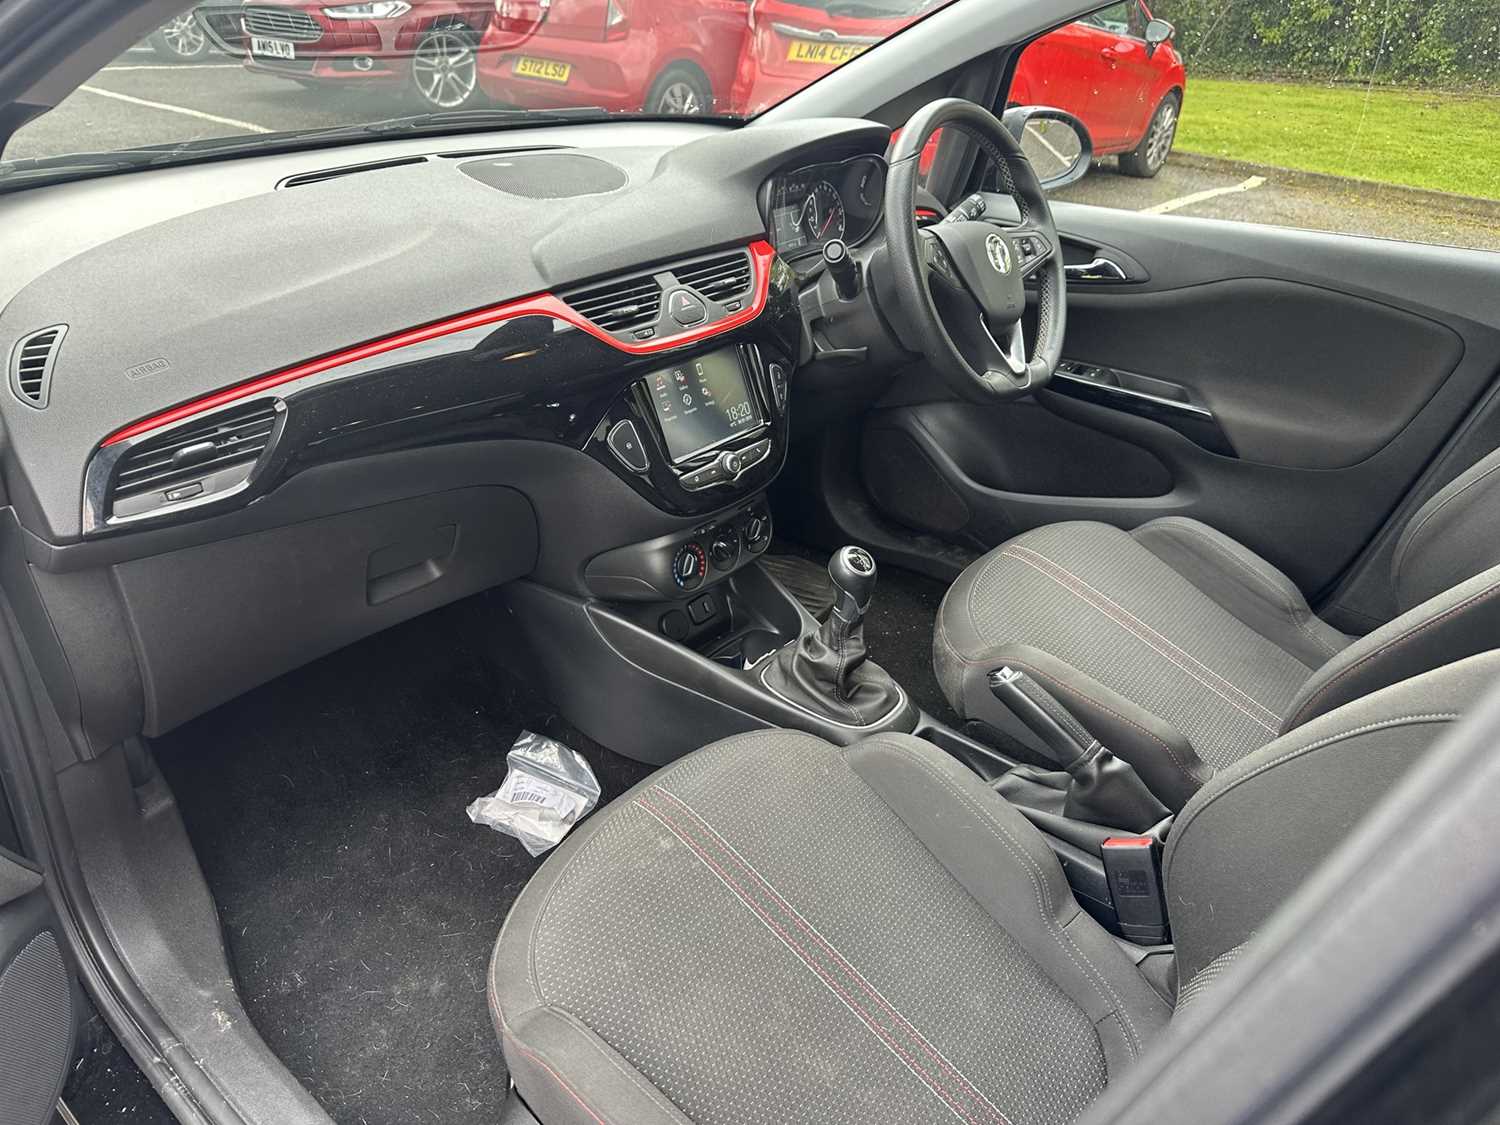 2019 Vauxhall Corsa SRI VX - Line Nav Black, 5 door hatchback, manual, reg. no. VU19 RYK - Image 15 of 15